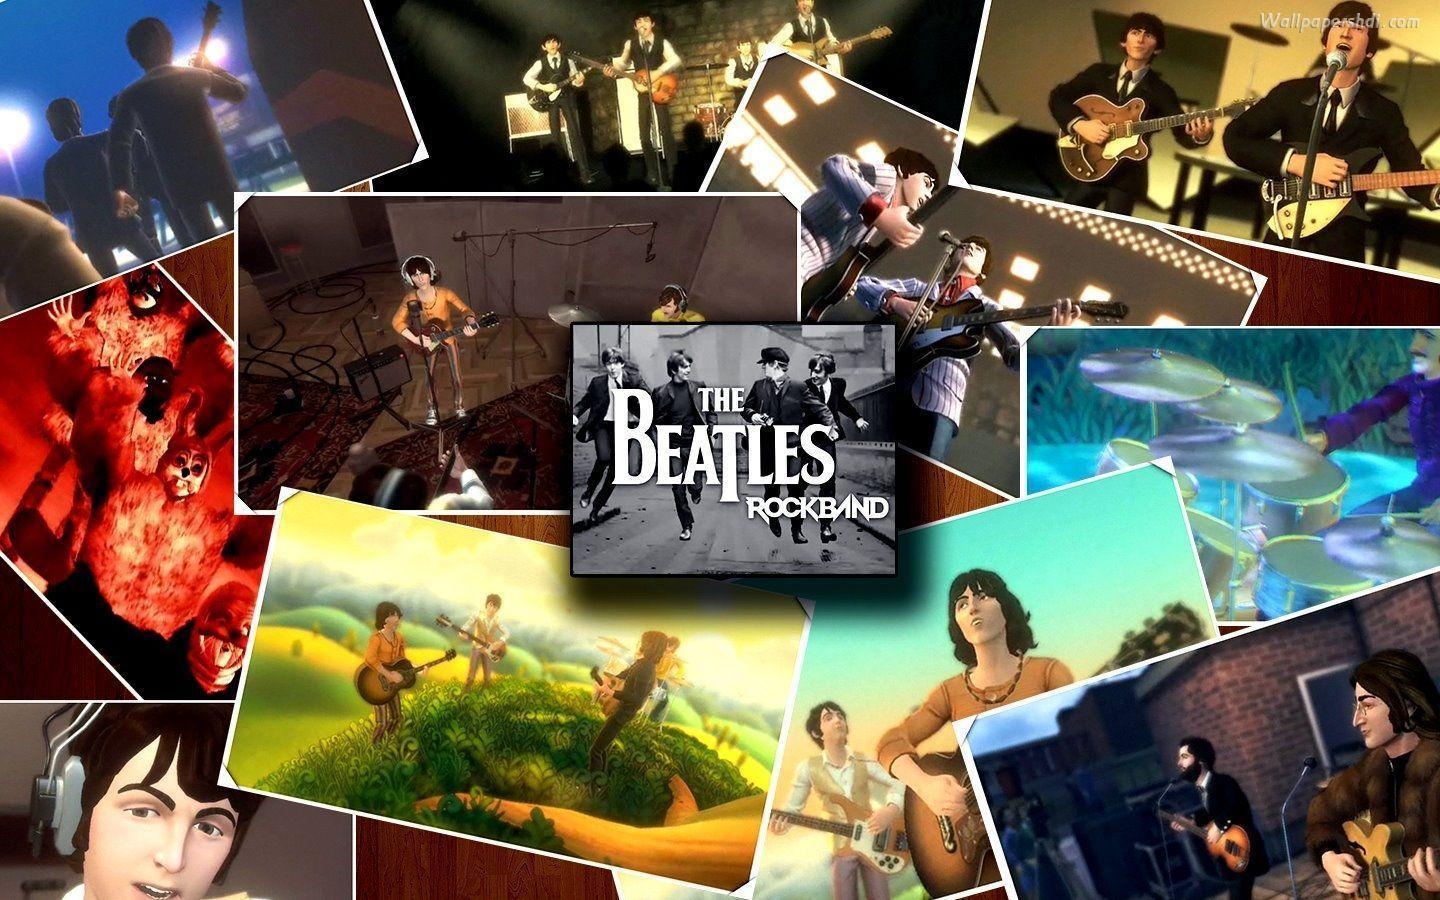 Wallpaper For > Beatles Rockband Wallpaper